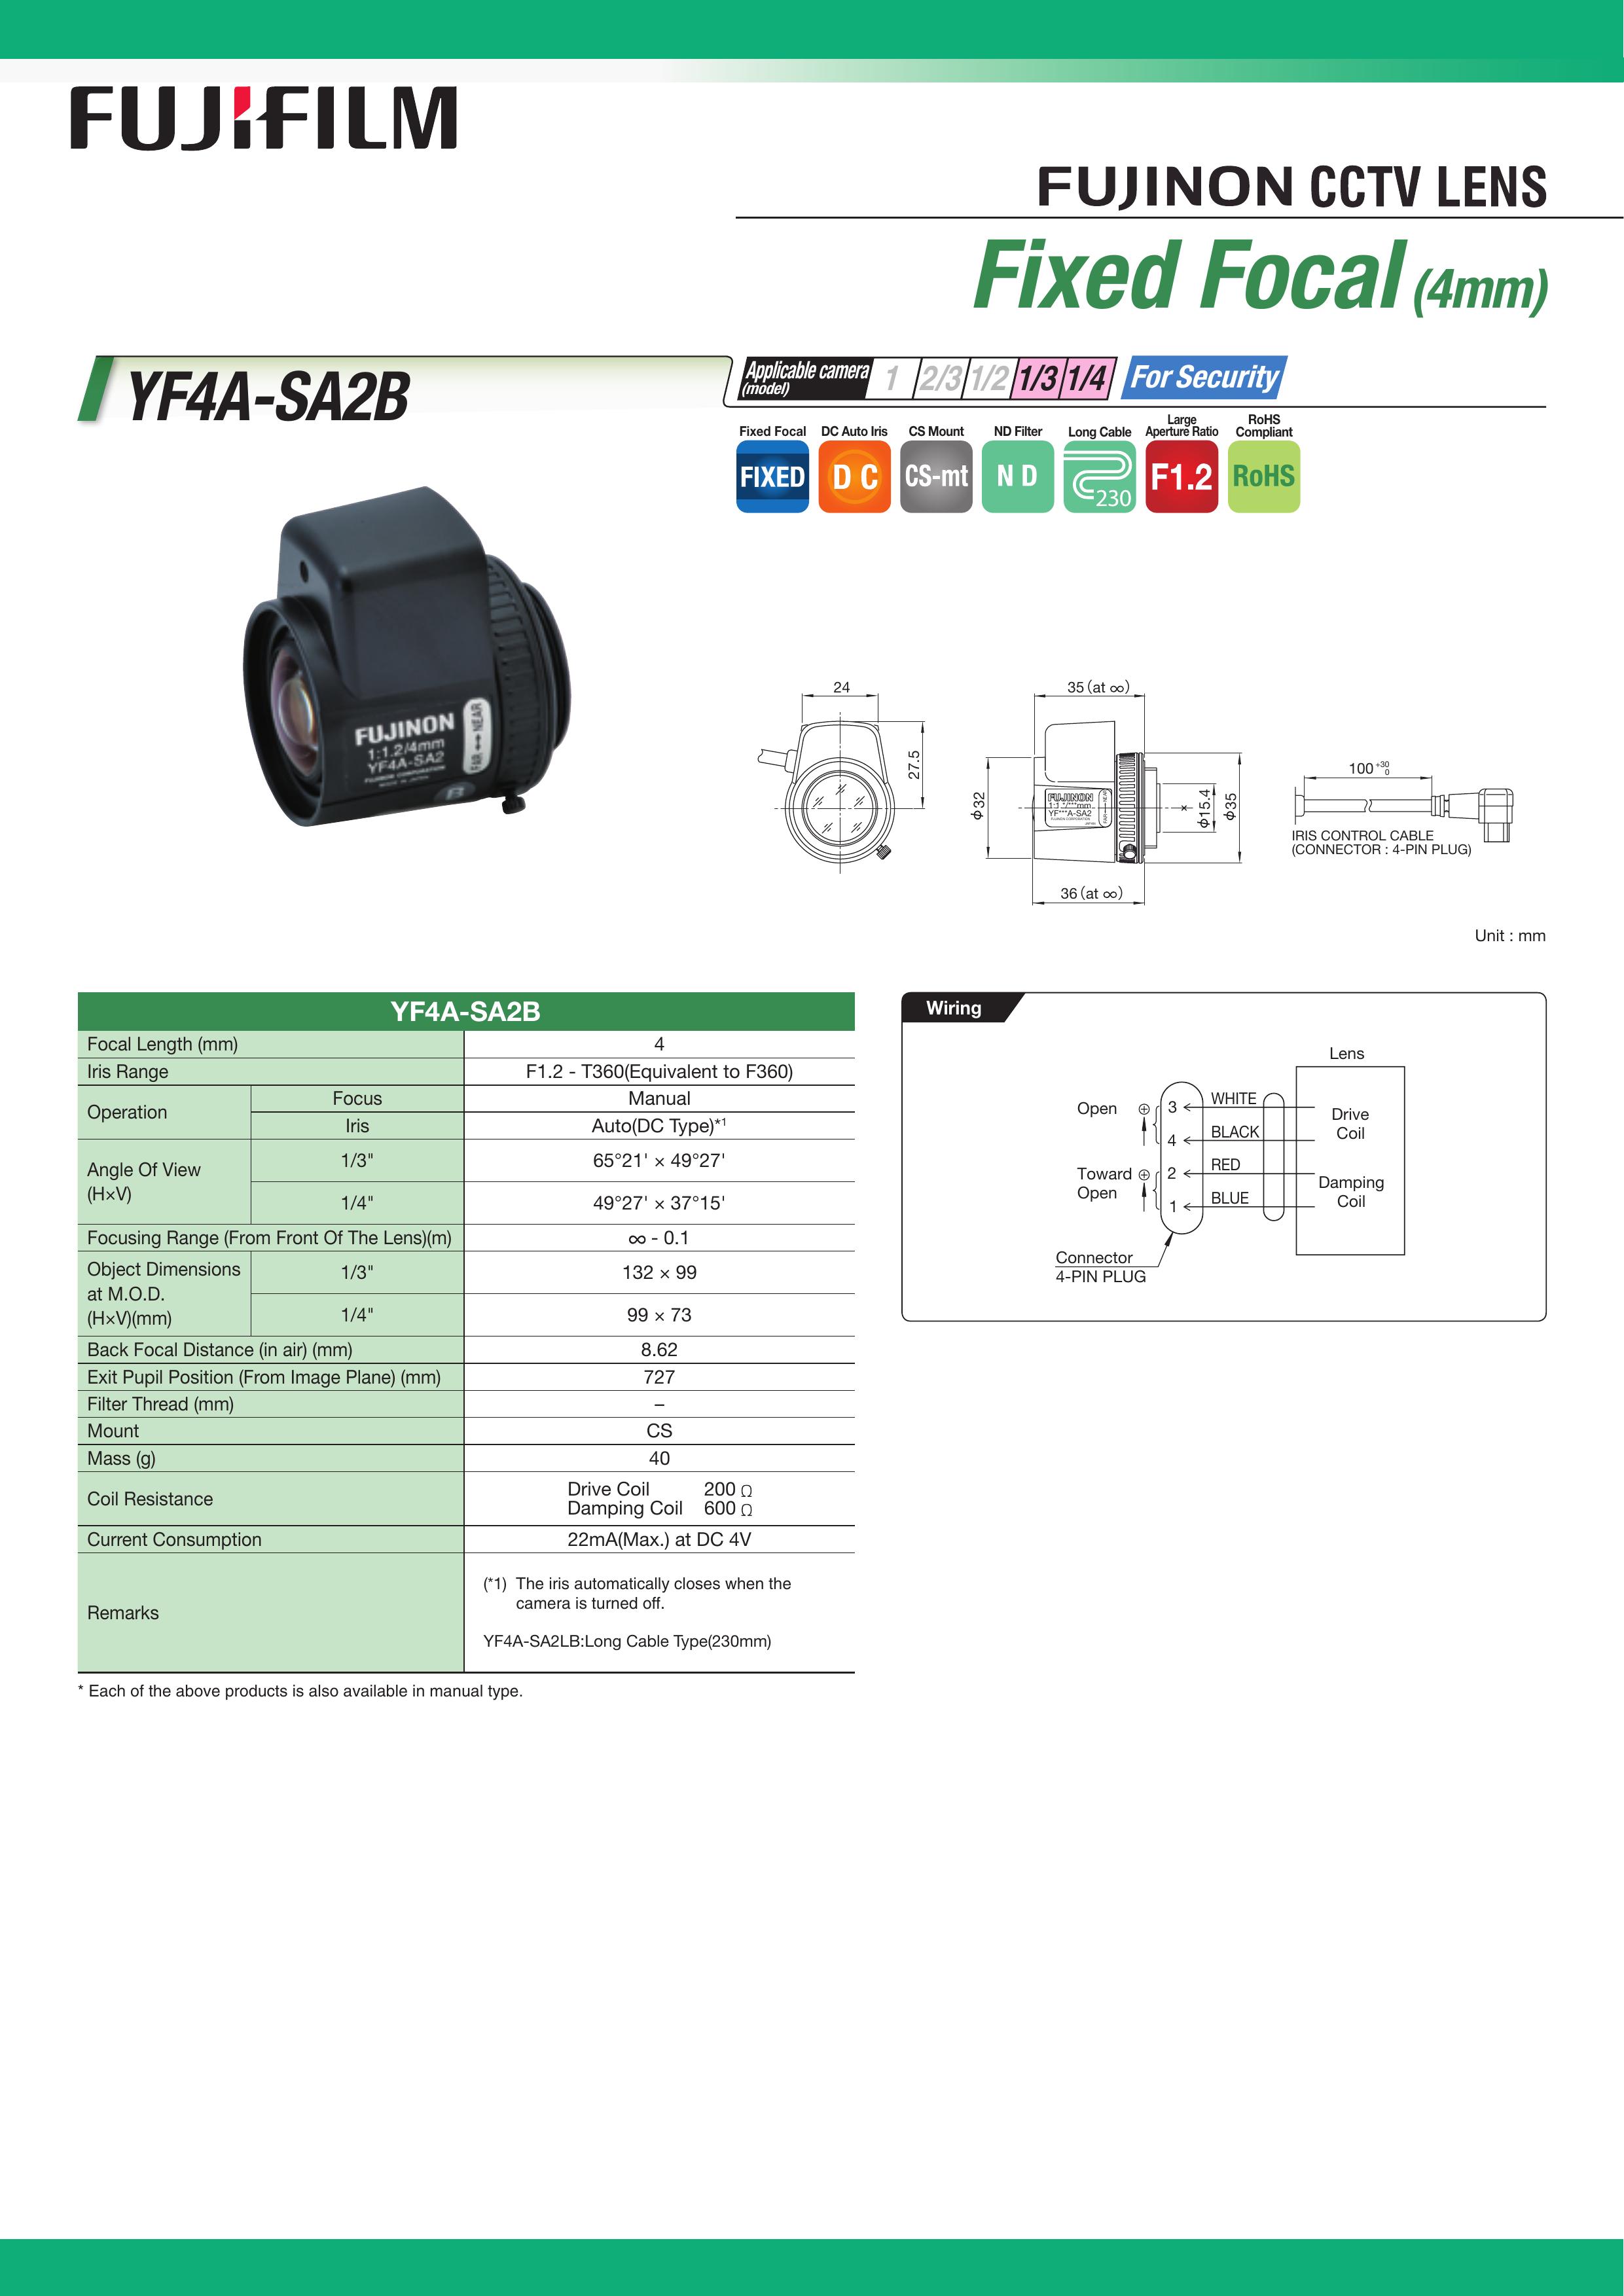 FujiFilm YF4A-SA2B Camera Lens User Manual